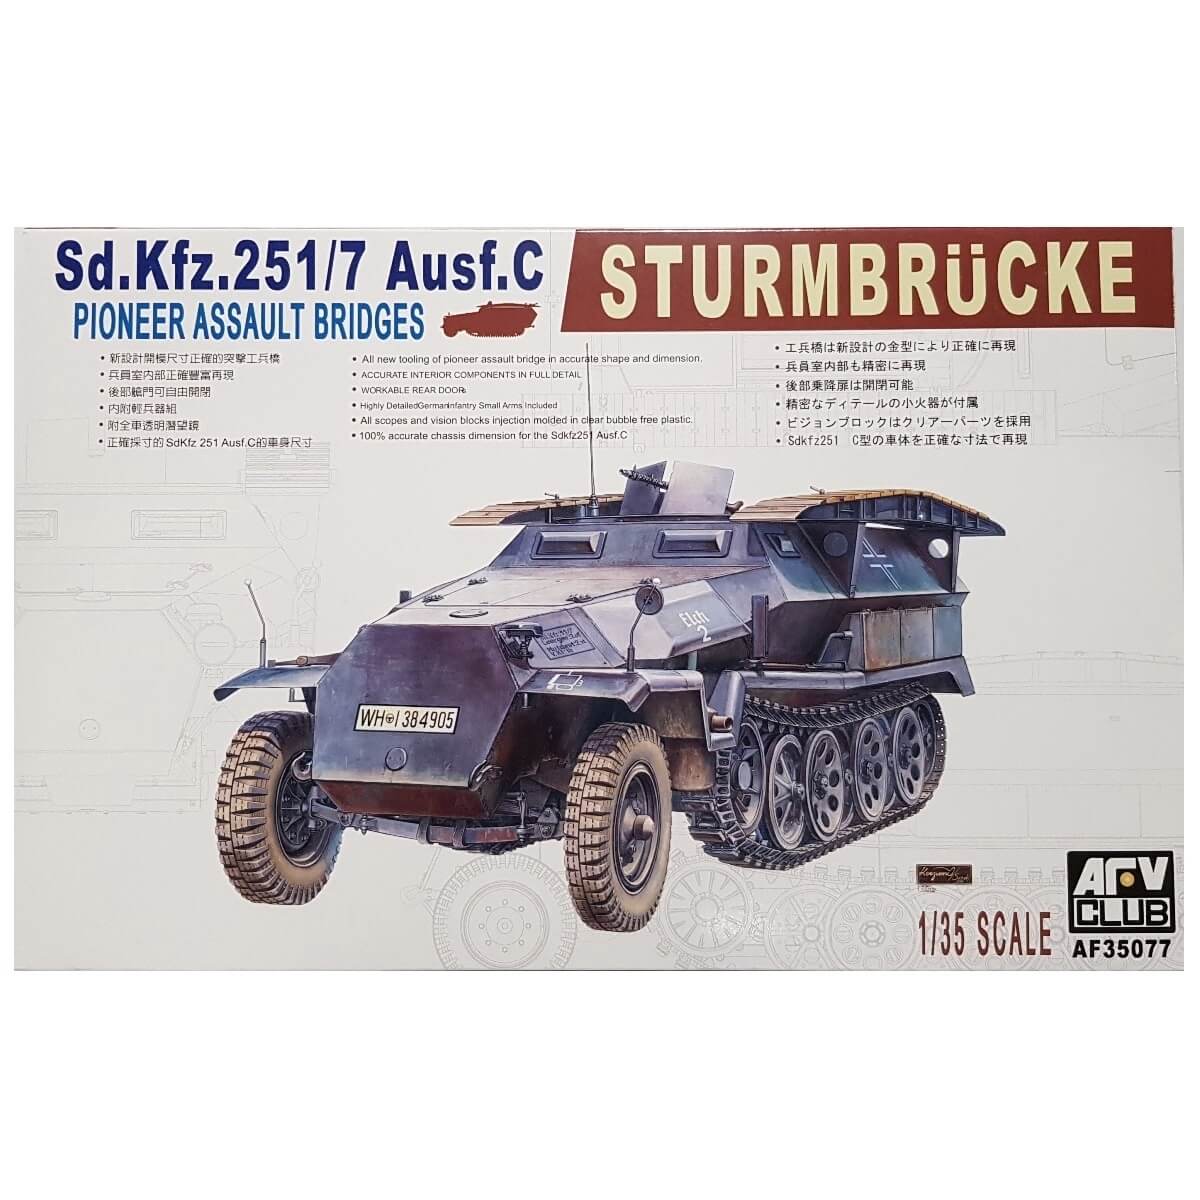 1:35 Sd.Kfz. 251/7 Ausf. C Sturmbrucke - AFV CLUB